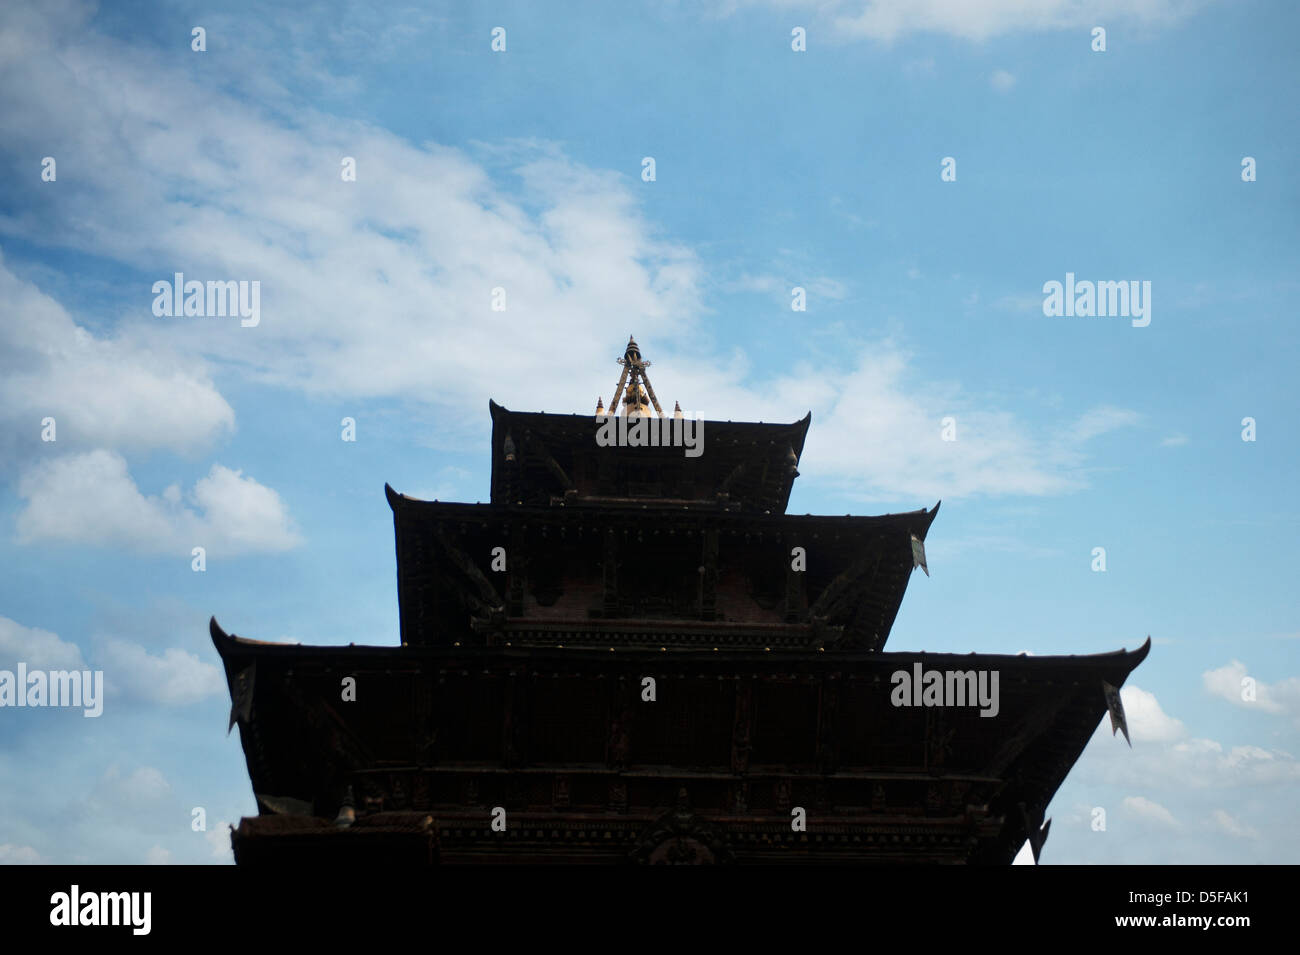 Low angle view of Taleju Temple, Hanuman Dhoka, Durbar Square, Kathmandu, Nepal Stock Photo